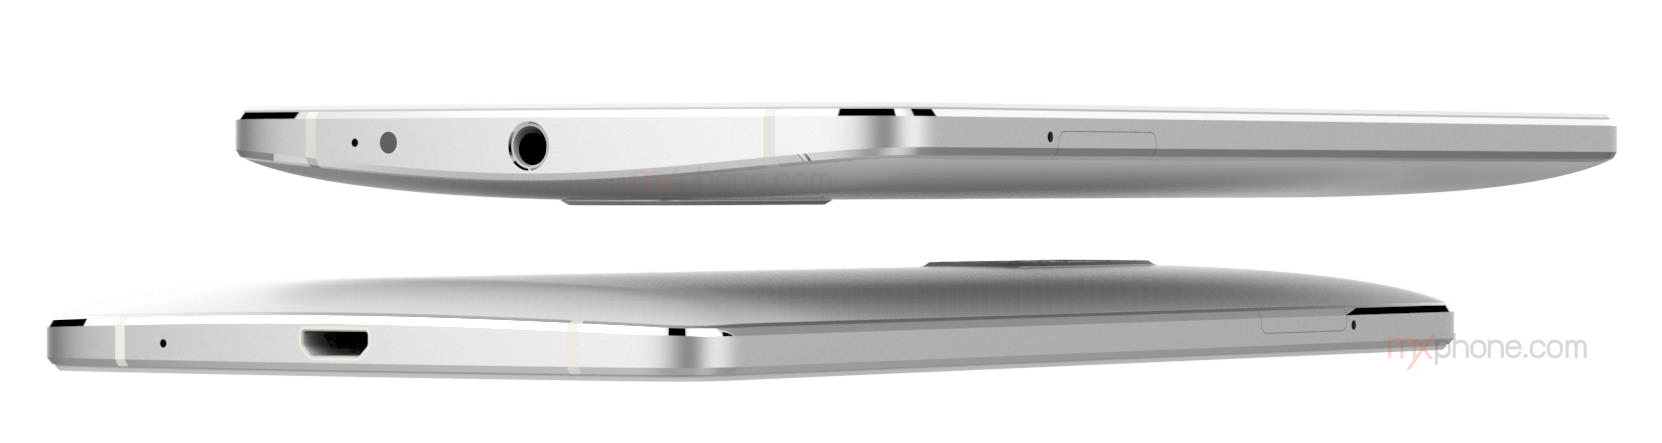 Dirilis September Nanti, Ini Spesifikasi Lenovo Vibe X3 dari GFXBench